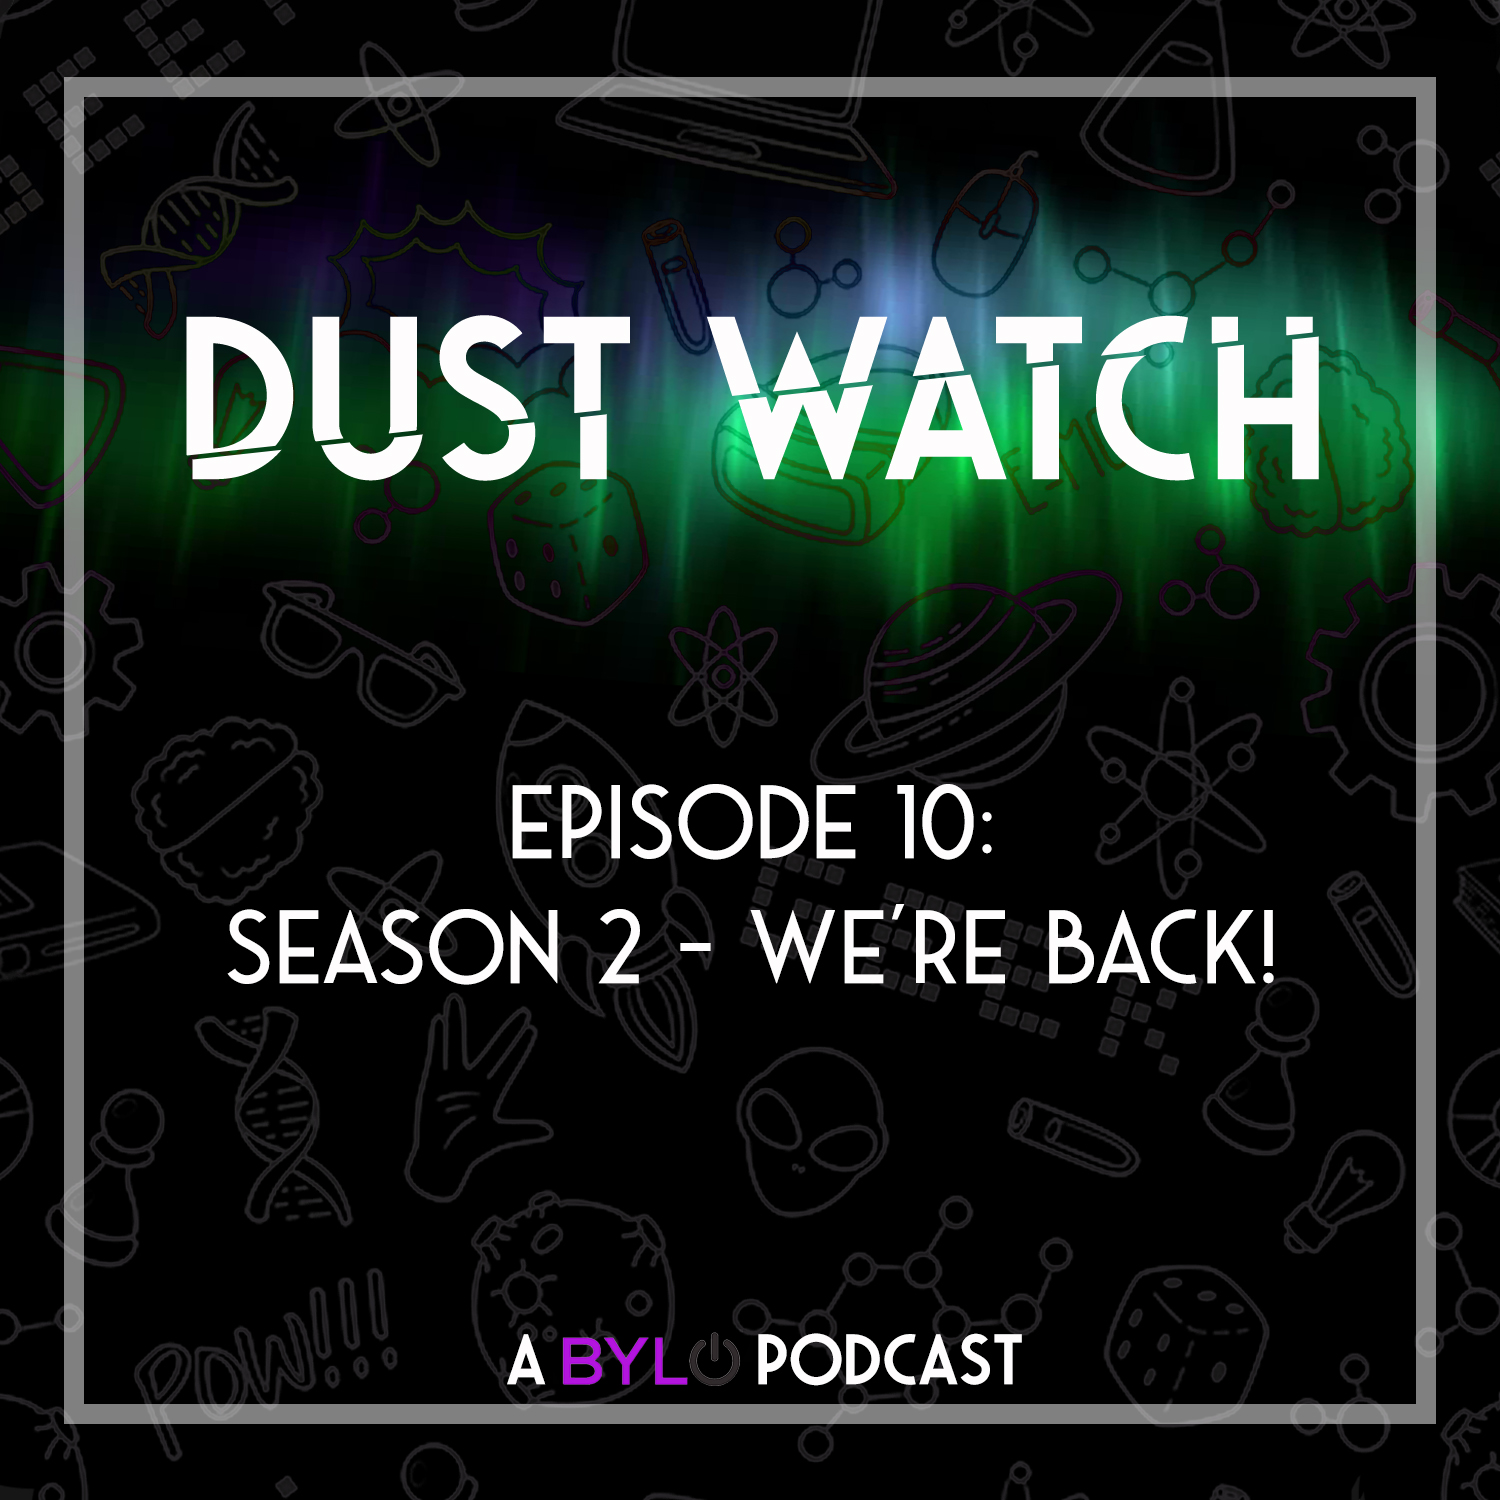 Dust Watch ep 10: Season 2 - We're Back!